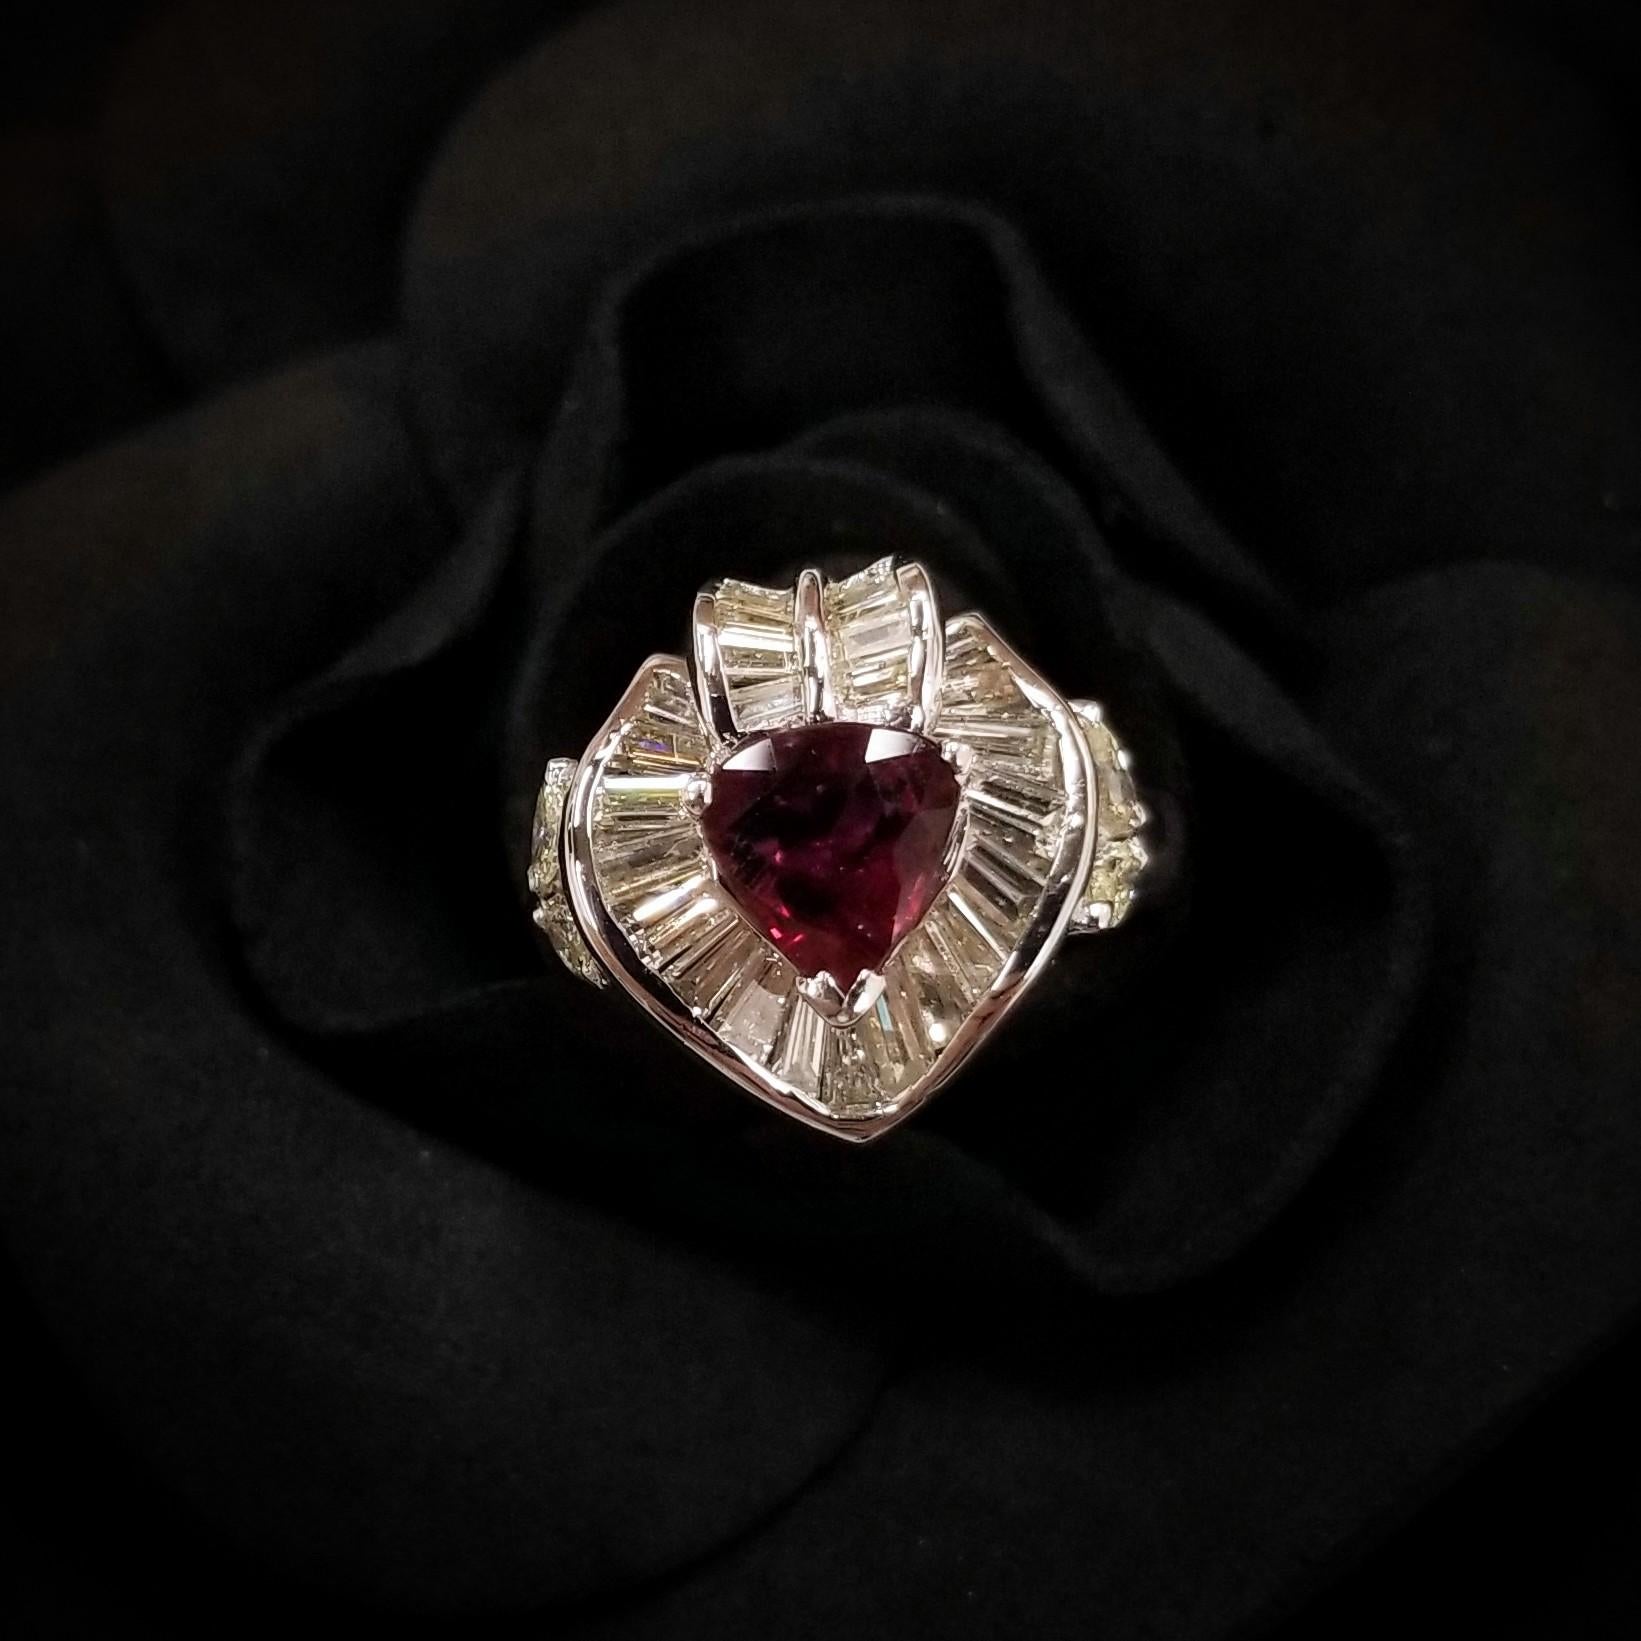 IGI Certified 1.35Carat Ruby & Diamond Ring in 18K White Gold For Sale 1